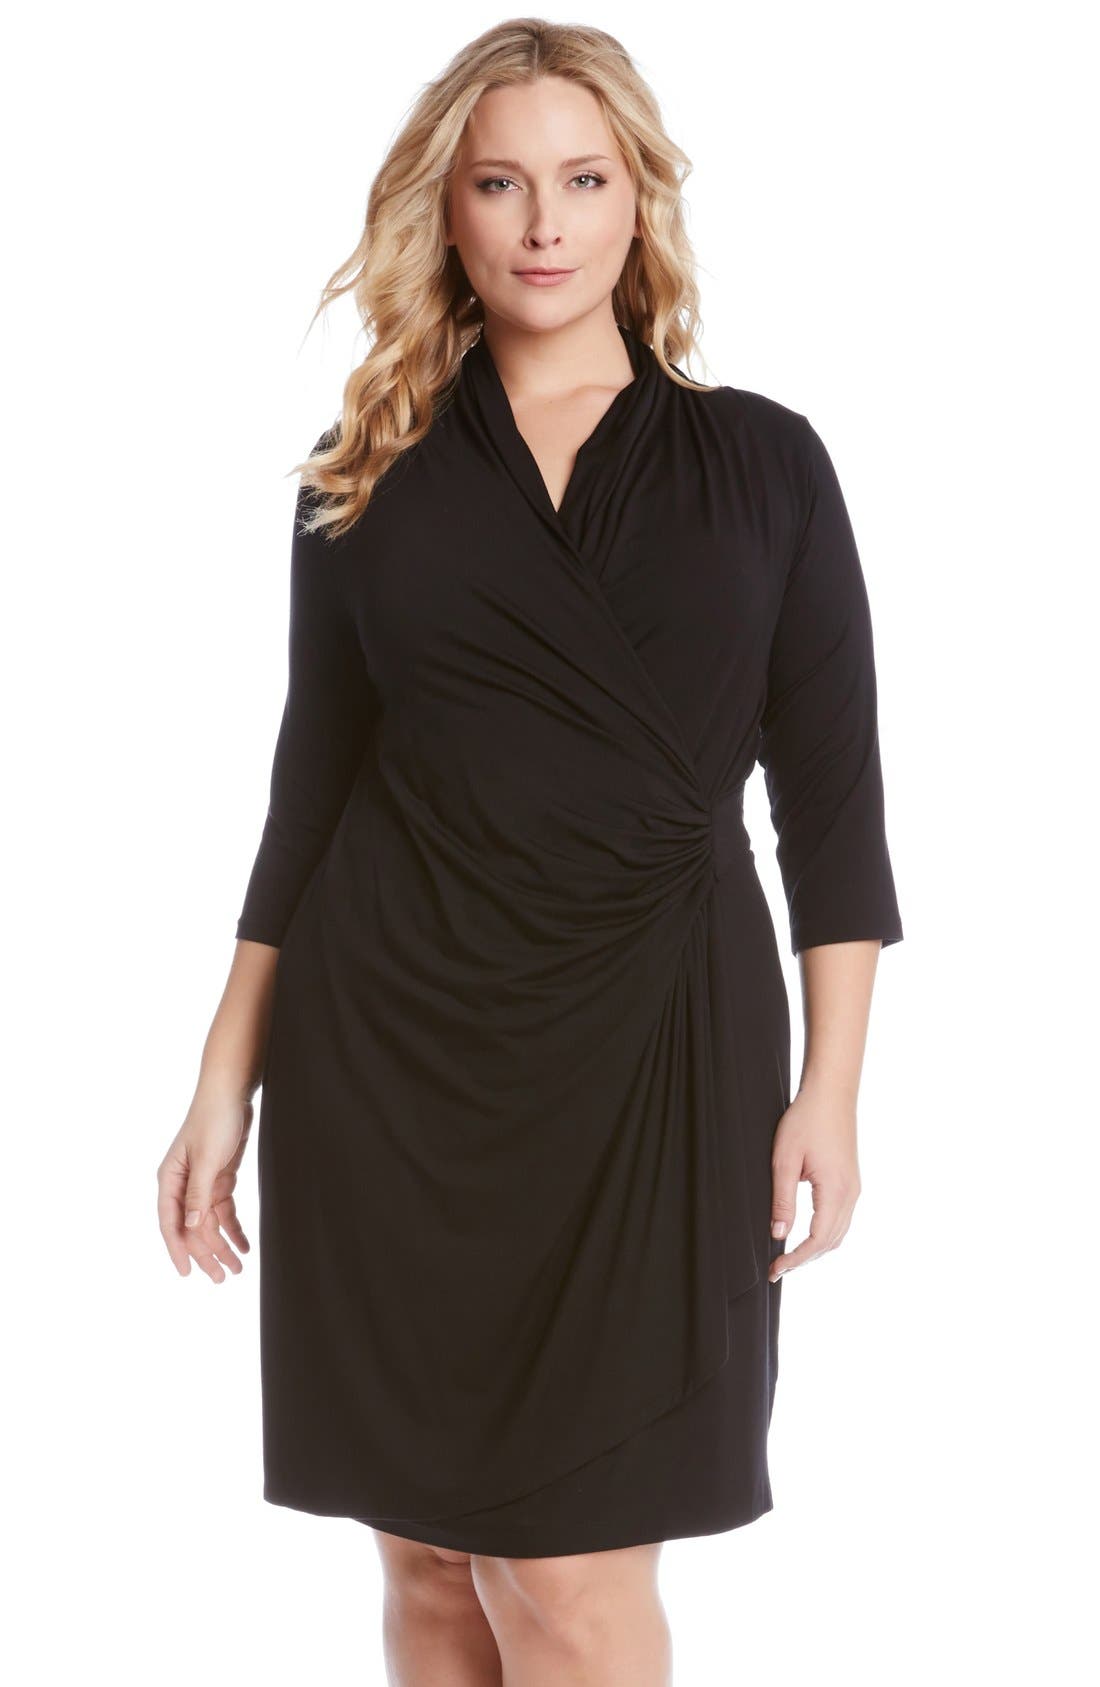 $118 Karen Kane Blue/Black Plus Size Confetti Geo Print Stretch Jersey Dress